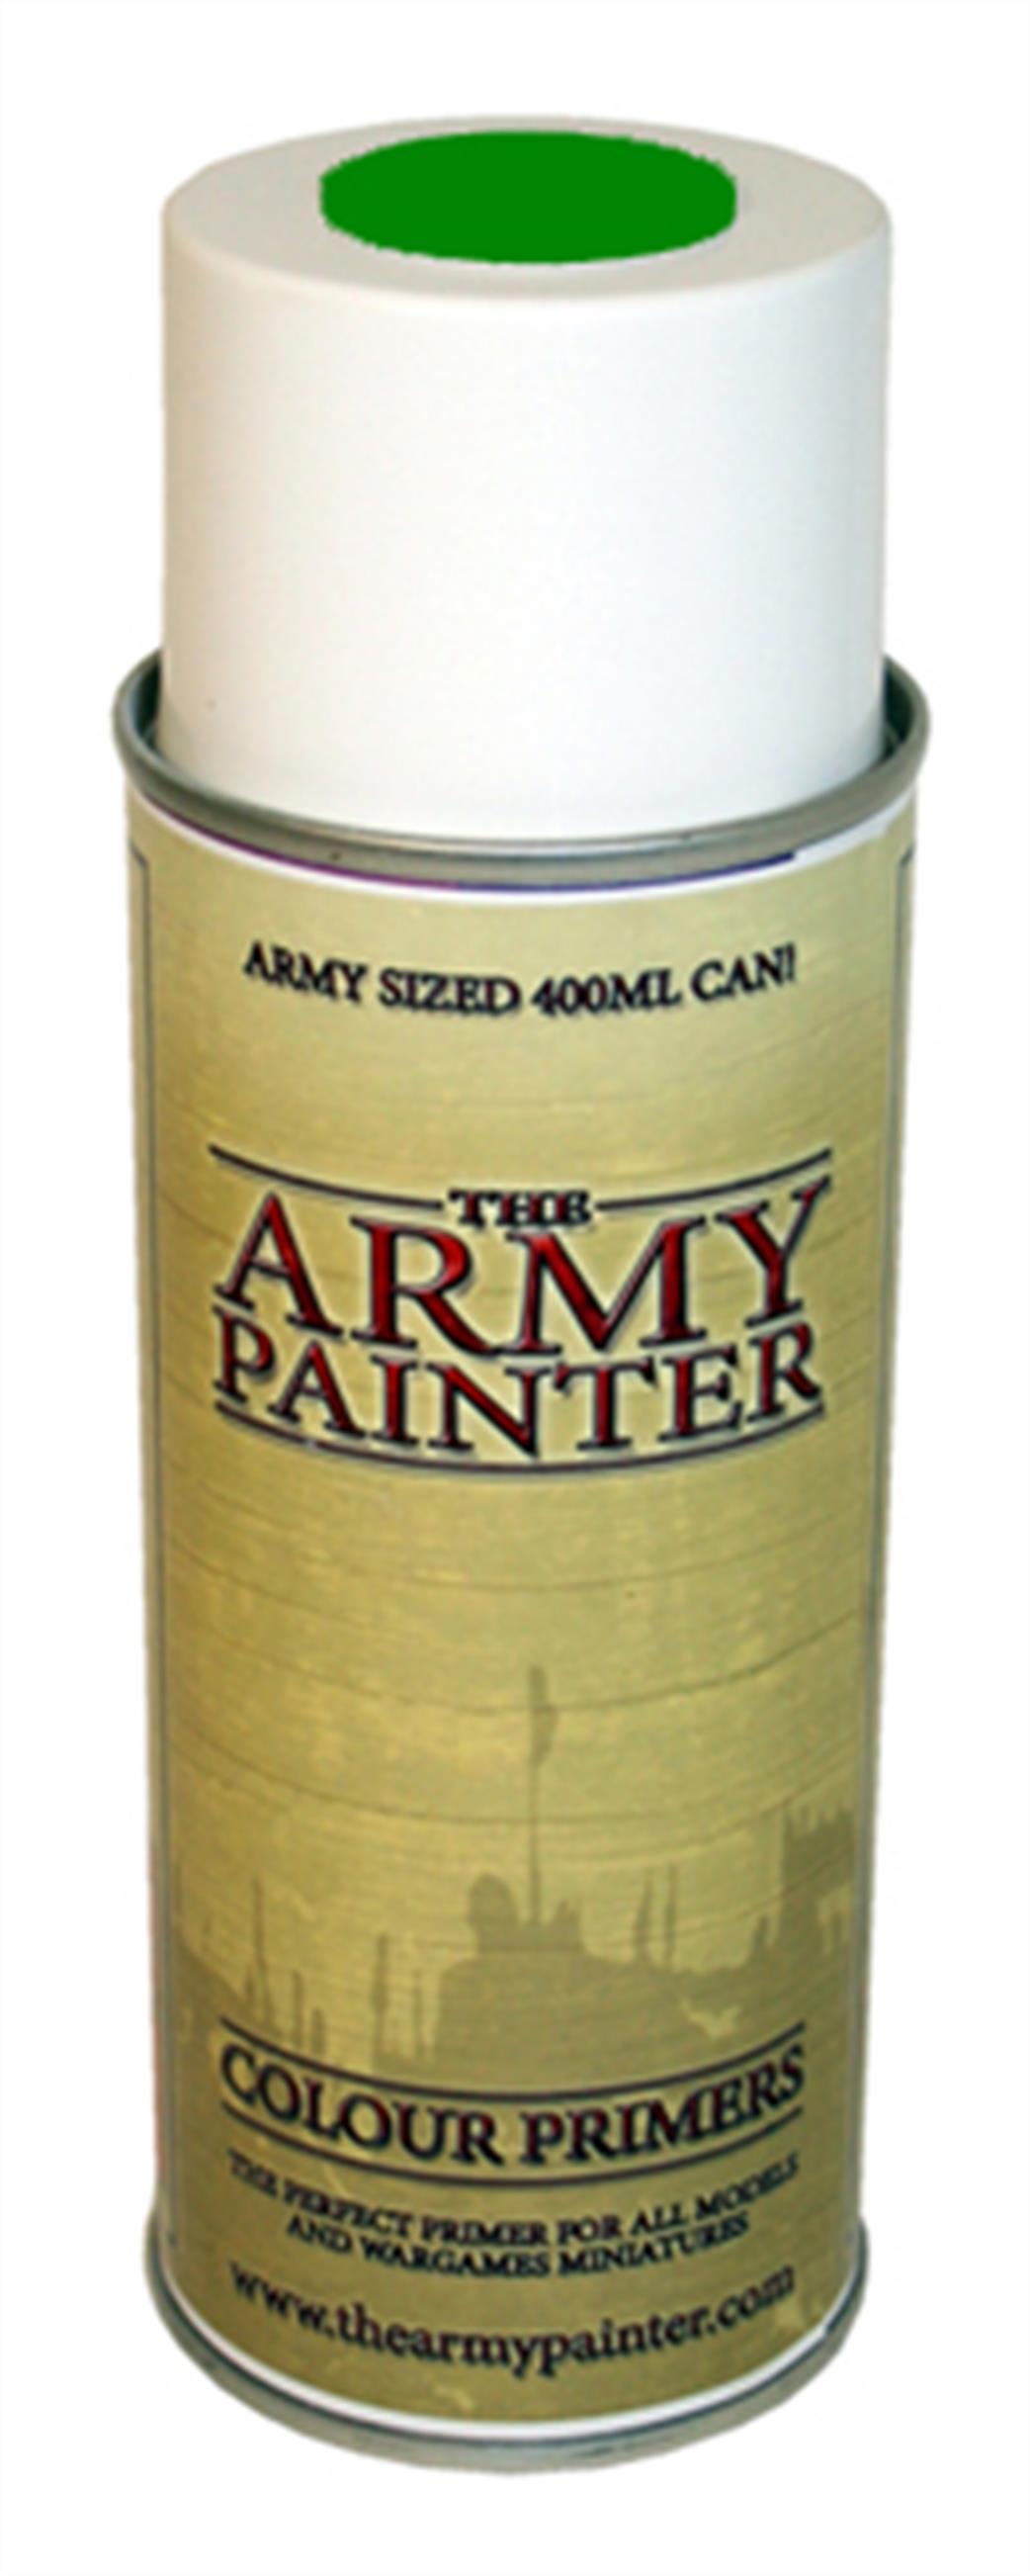 Army Painter  3014 Green Skin Colour Primer Spray 400ml